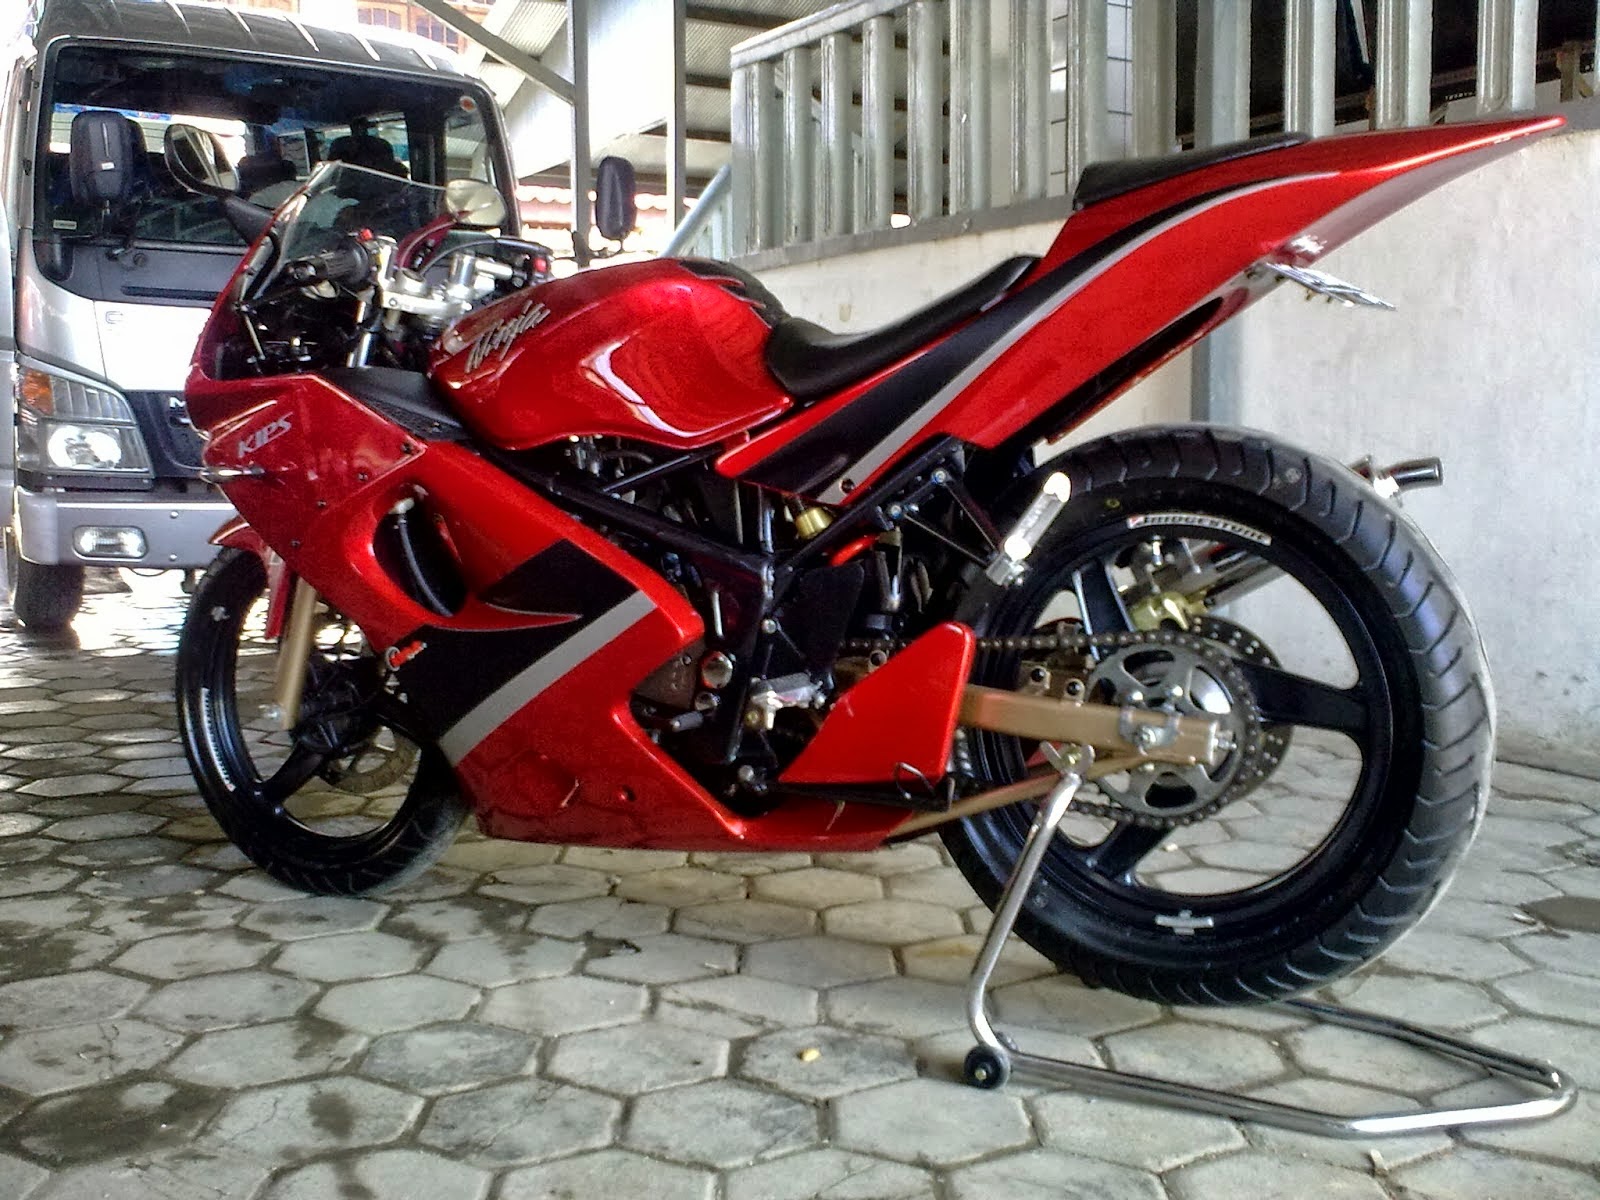 Modifikasi Motor Kawasaki Ninja Versi Superbike Juliana Kenzi Site